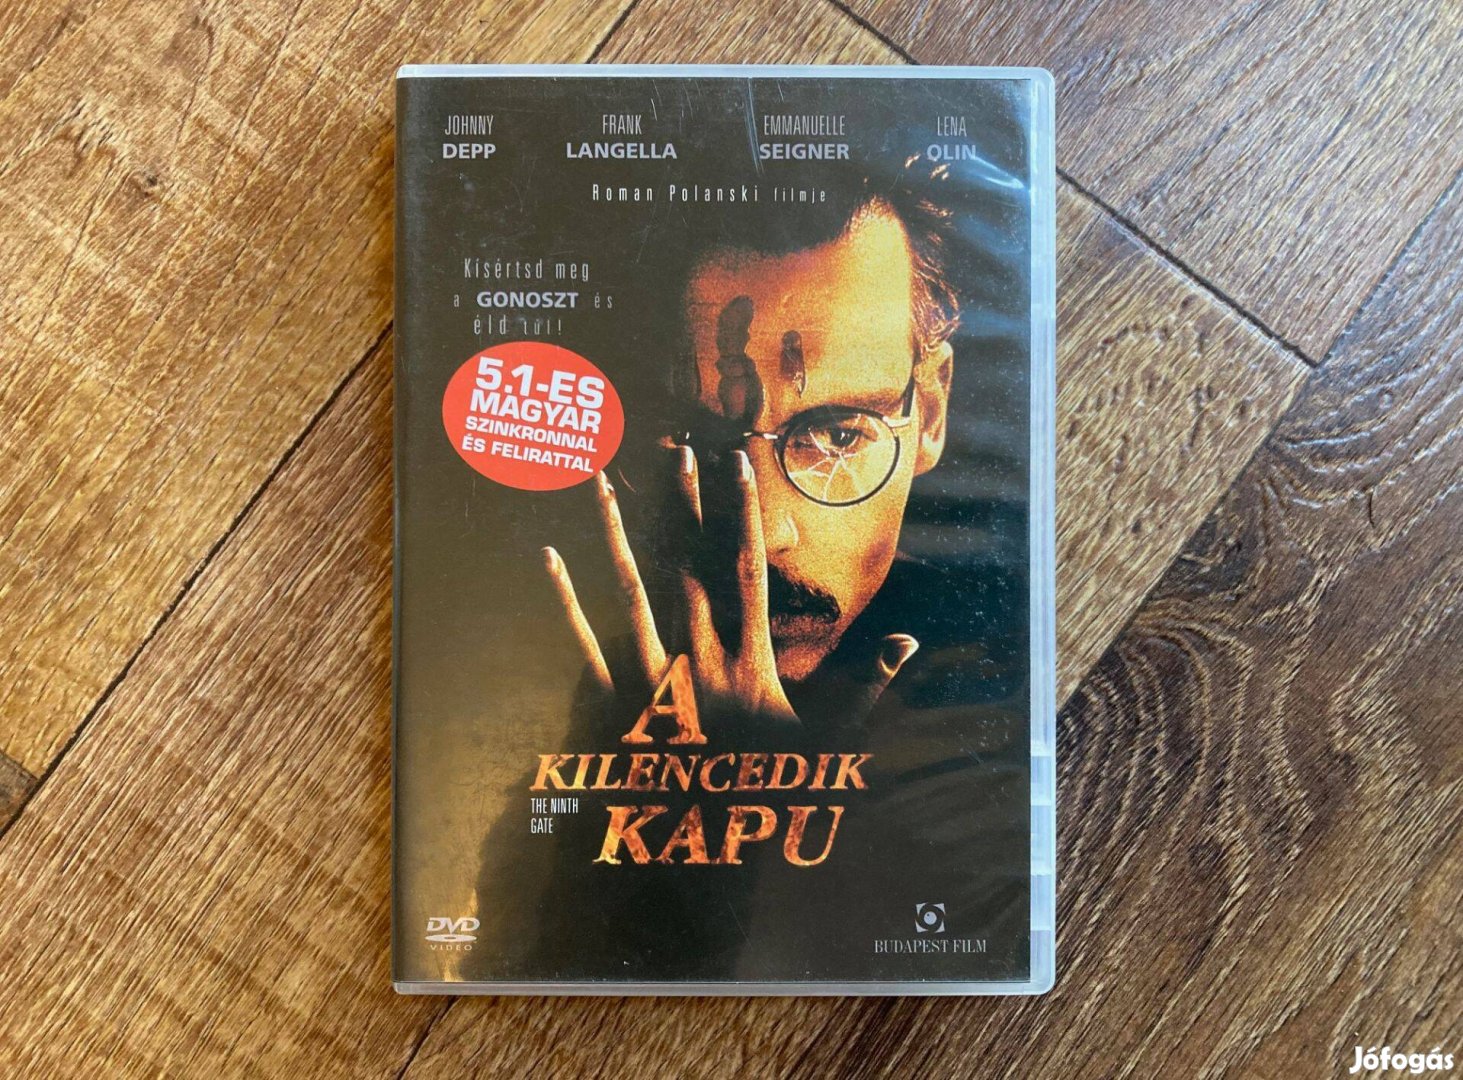 Roman Polanski, Johhny Depp: A kilencedik kapu